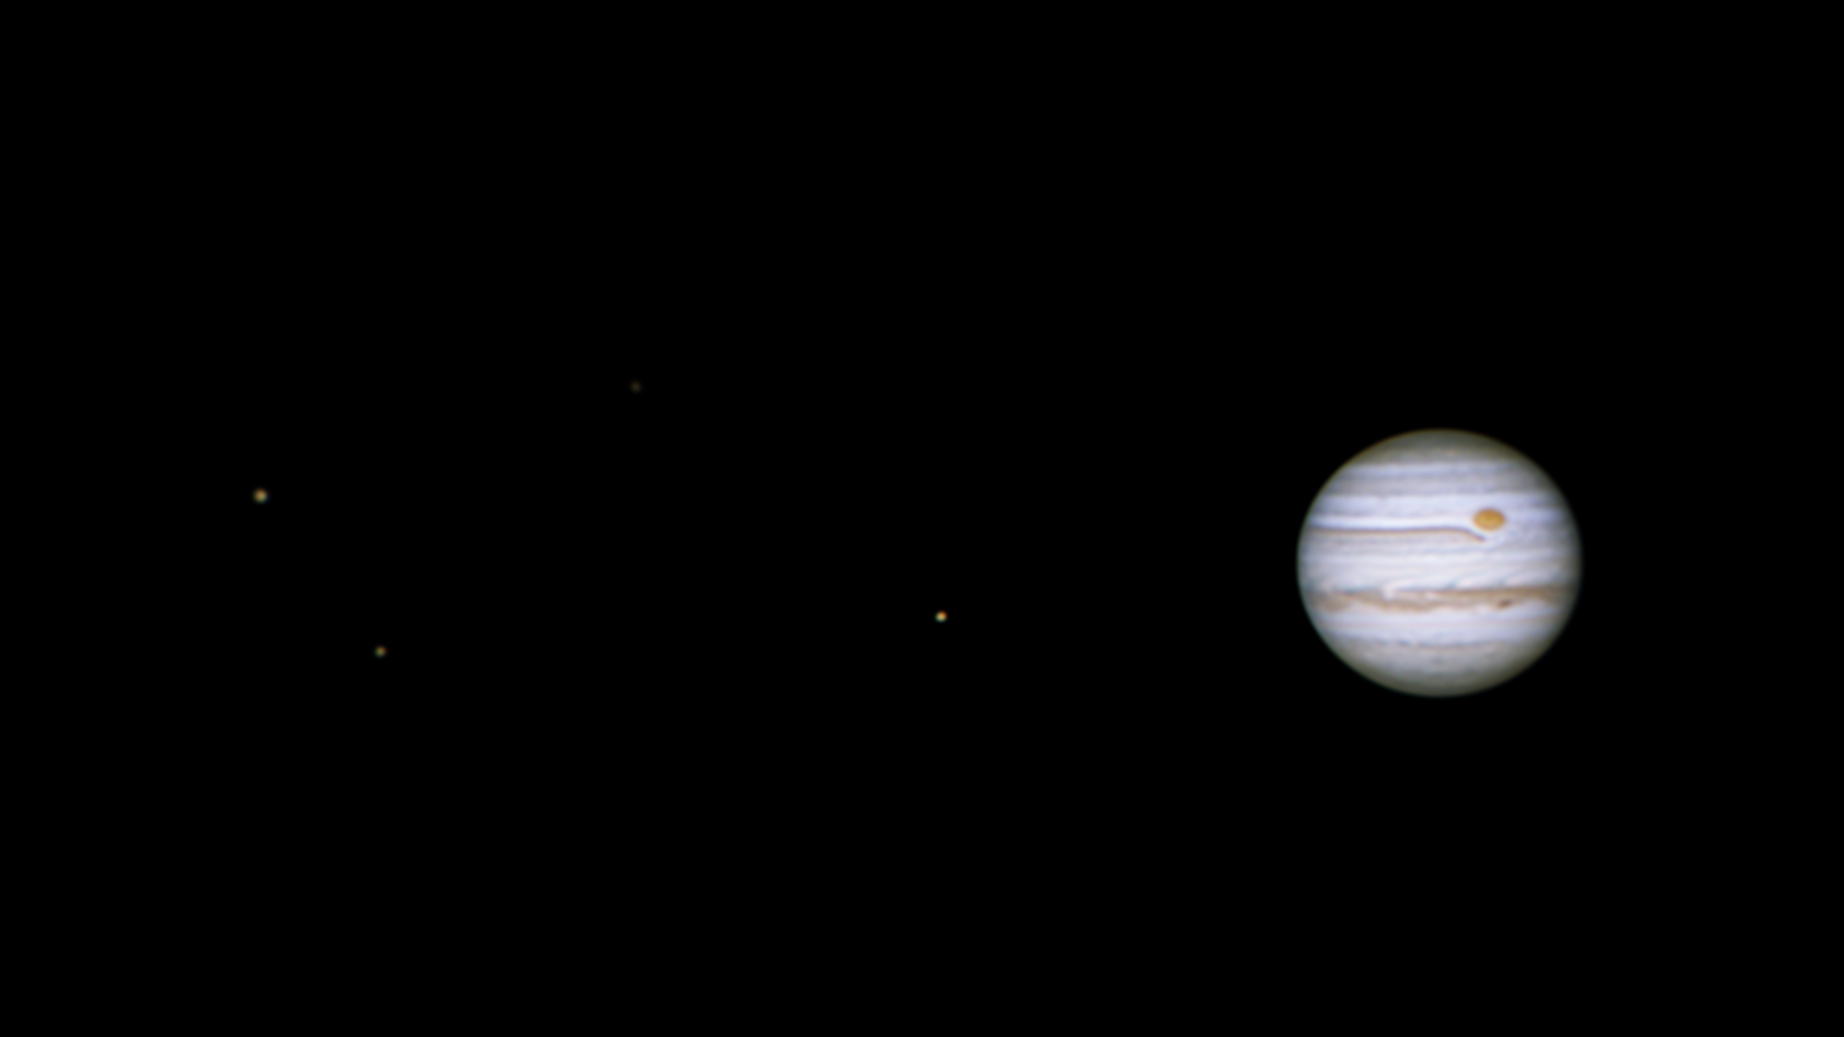 Sources: Stewart, P. (2018, June 8). Jupiter. flickr. https://www.flickr.com/photos/106648653@N05/42658035711